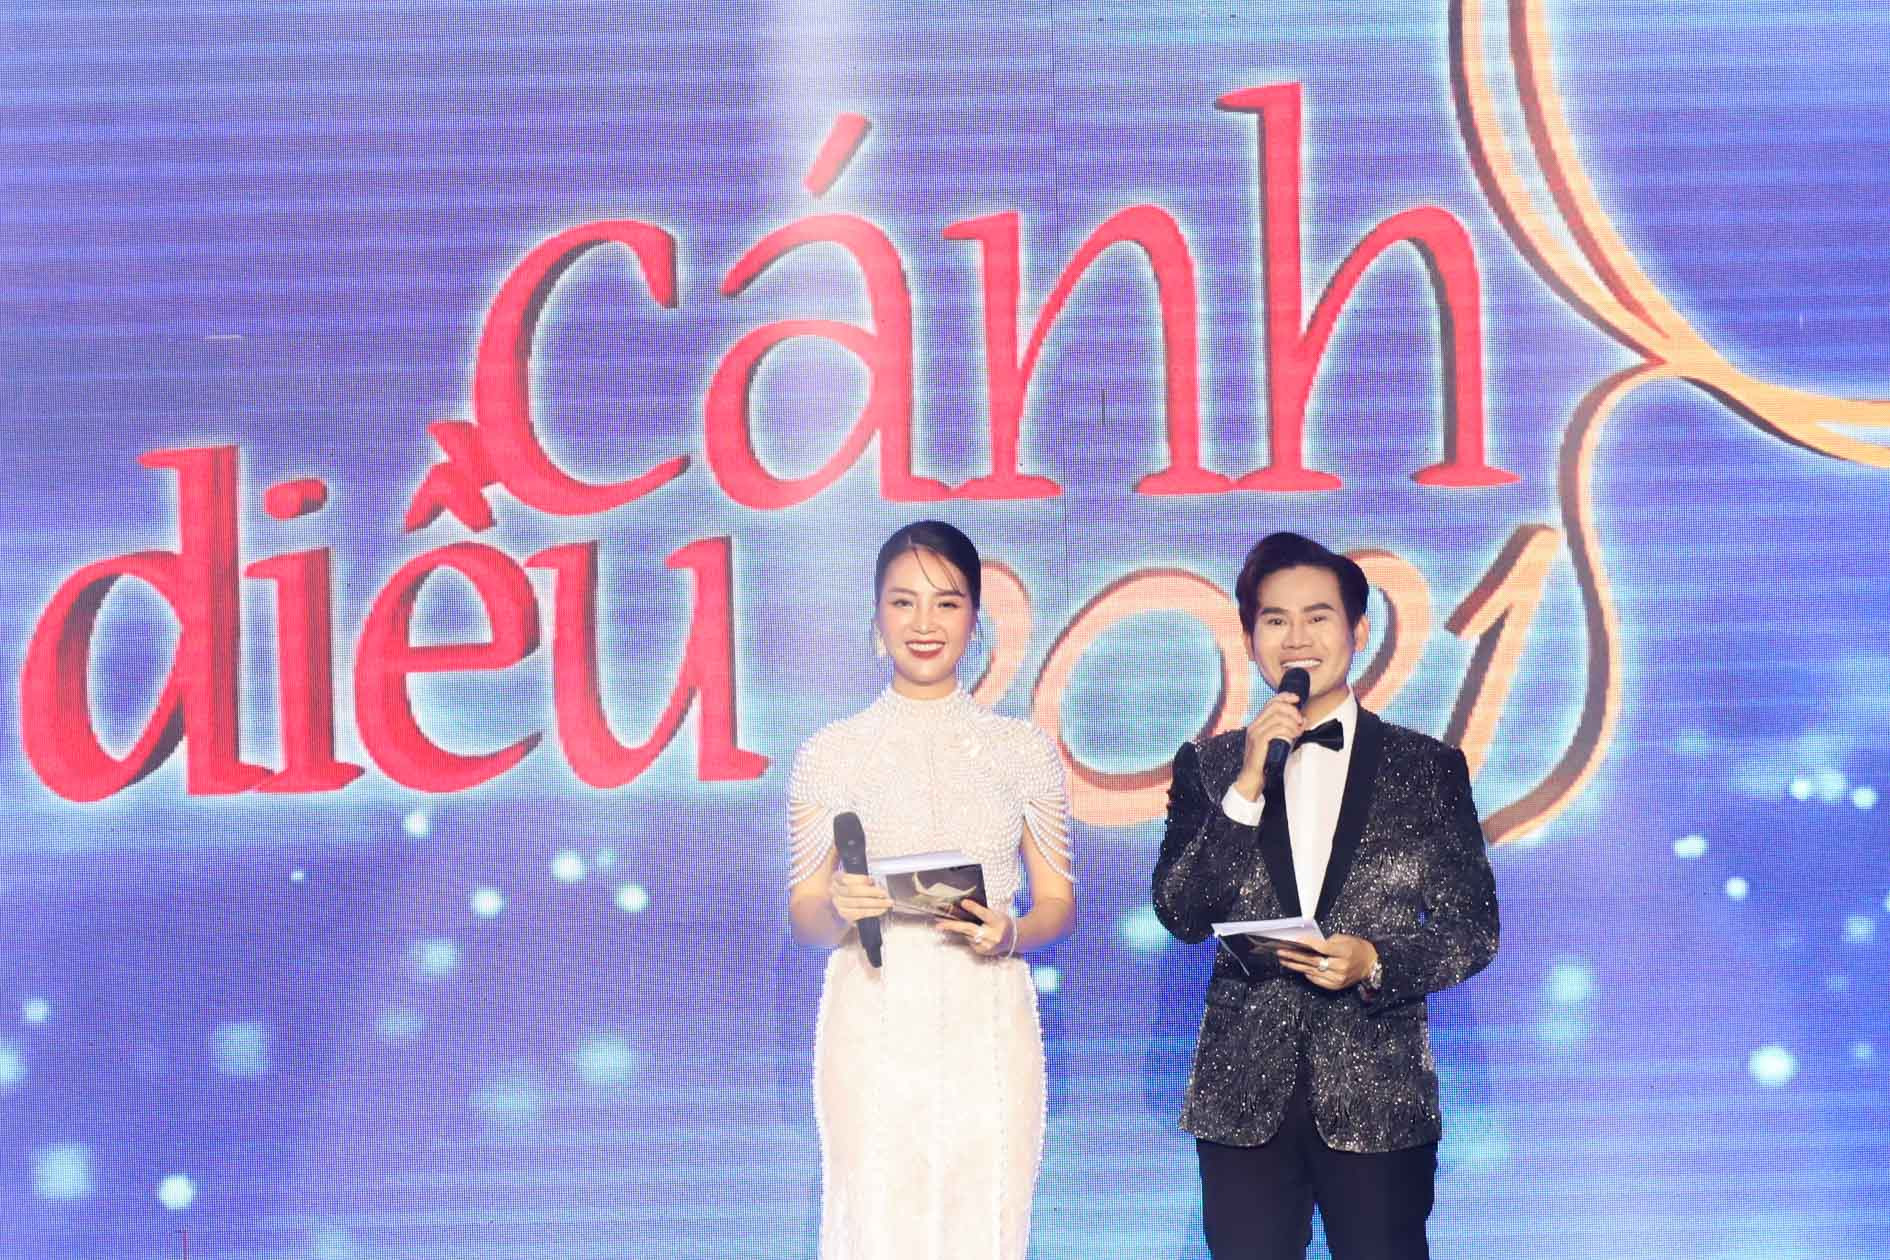 MCs Thuy Van and Hong Phuc hosting the awarding ceremony